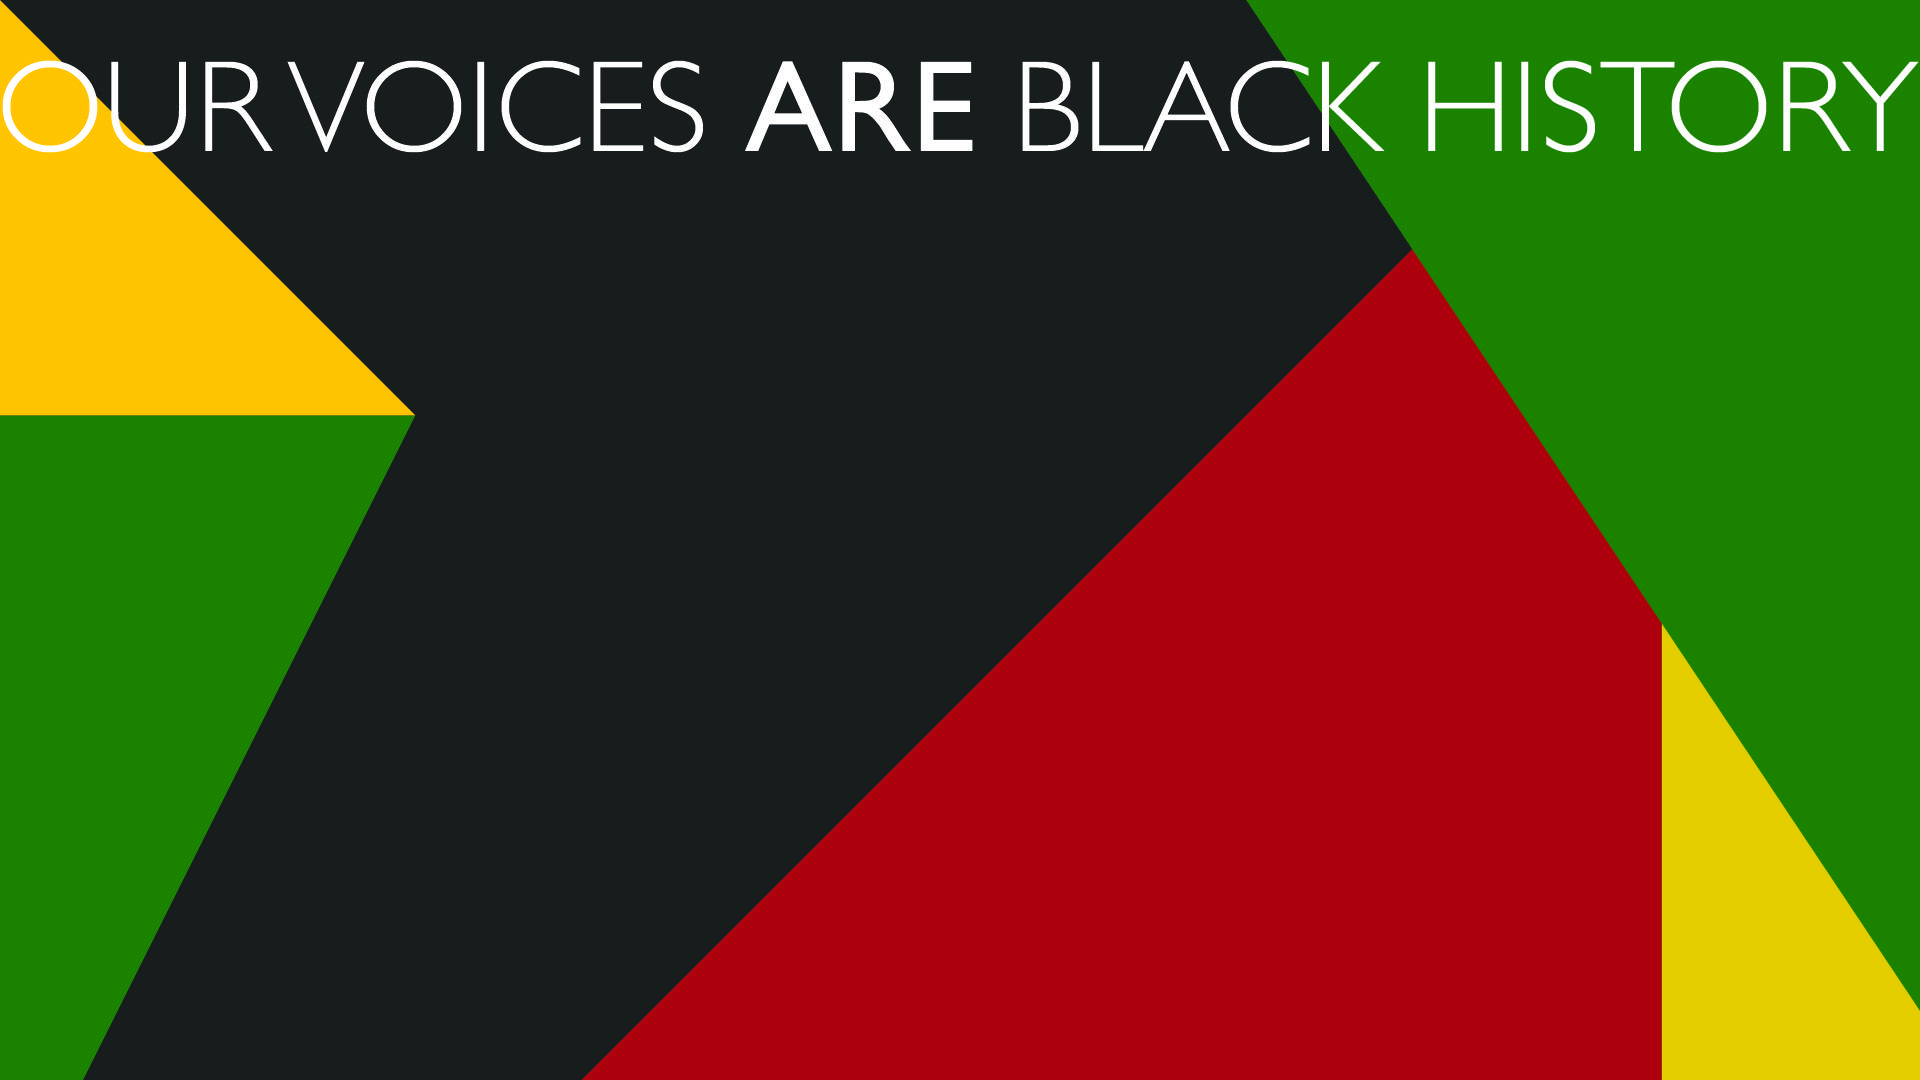 Black History Month : The University of Akron, Ohio